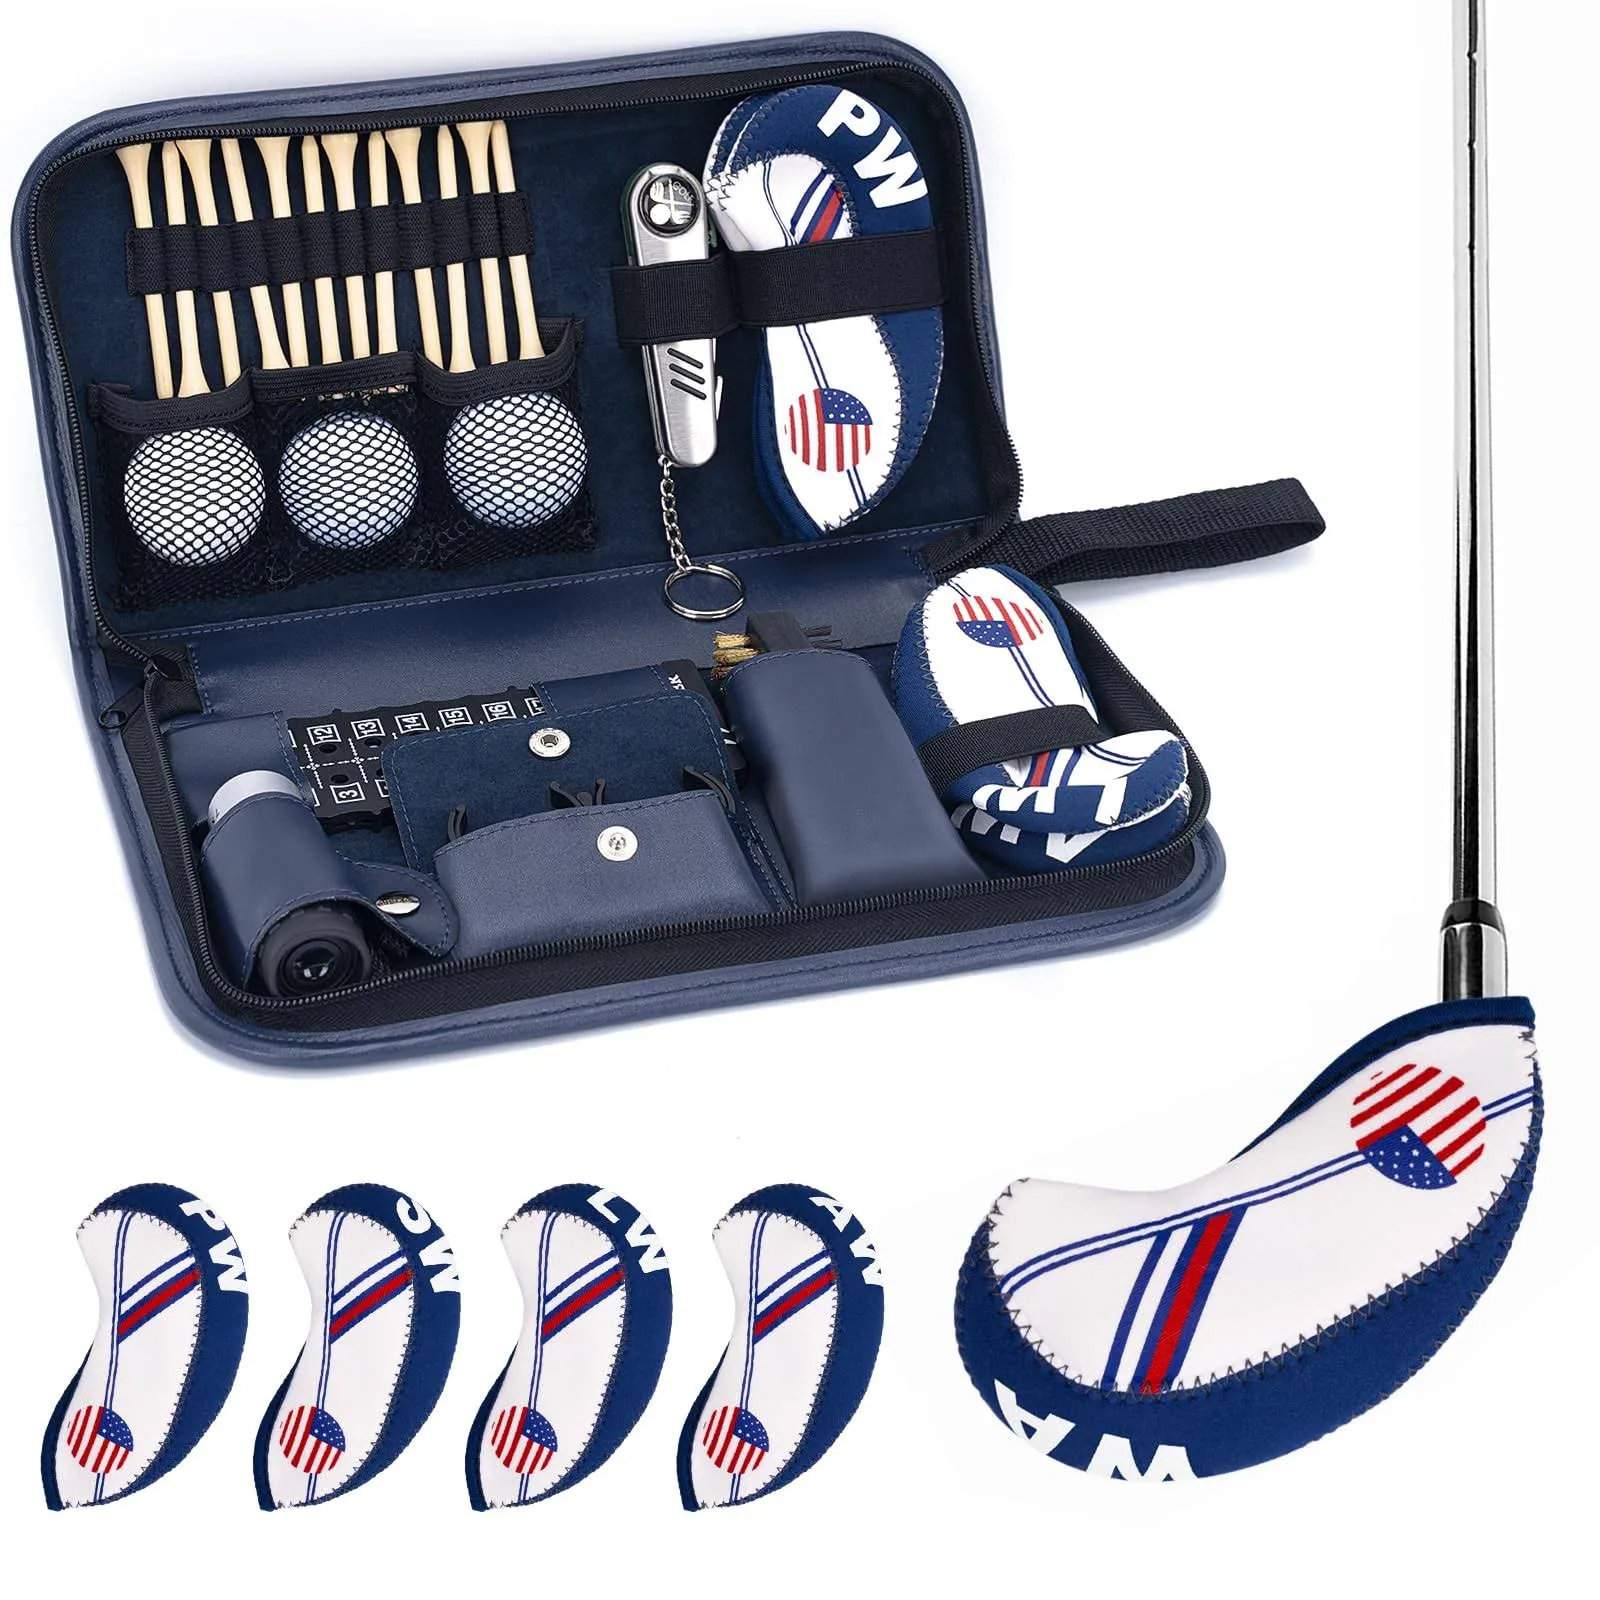 GiftList: LIFXIZE Golf Accessories for Men, Golf Accessories Kit